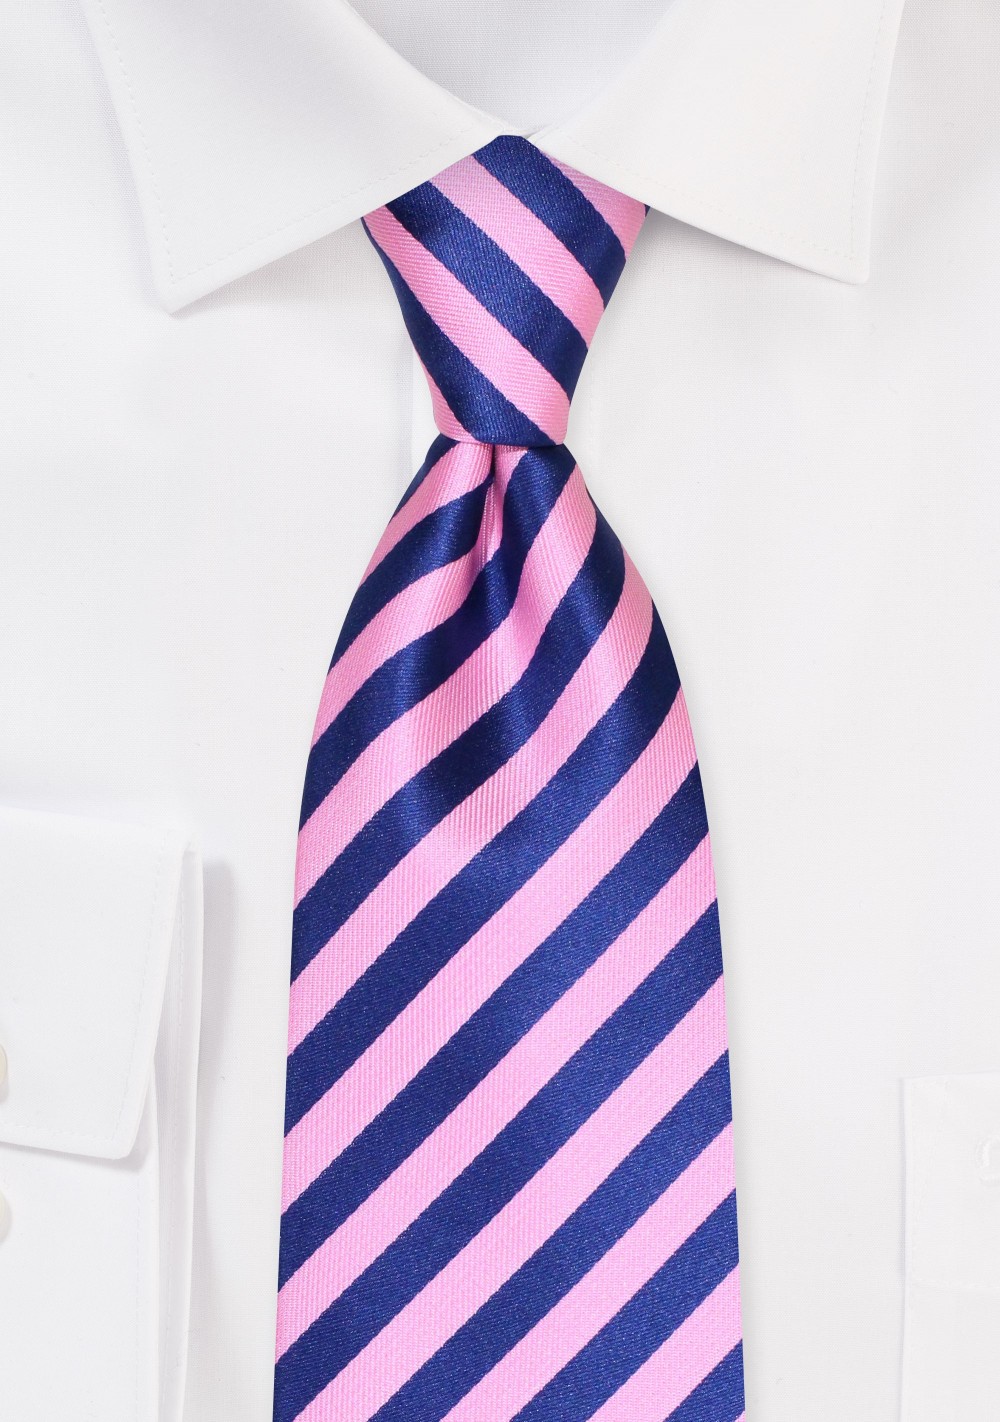 Summer Kids Tie in Pink and Navy Stripe